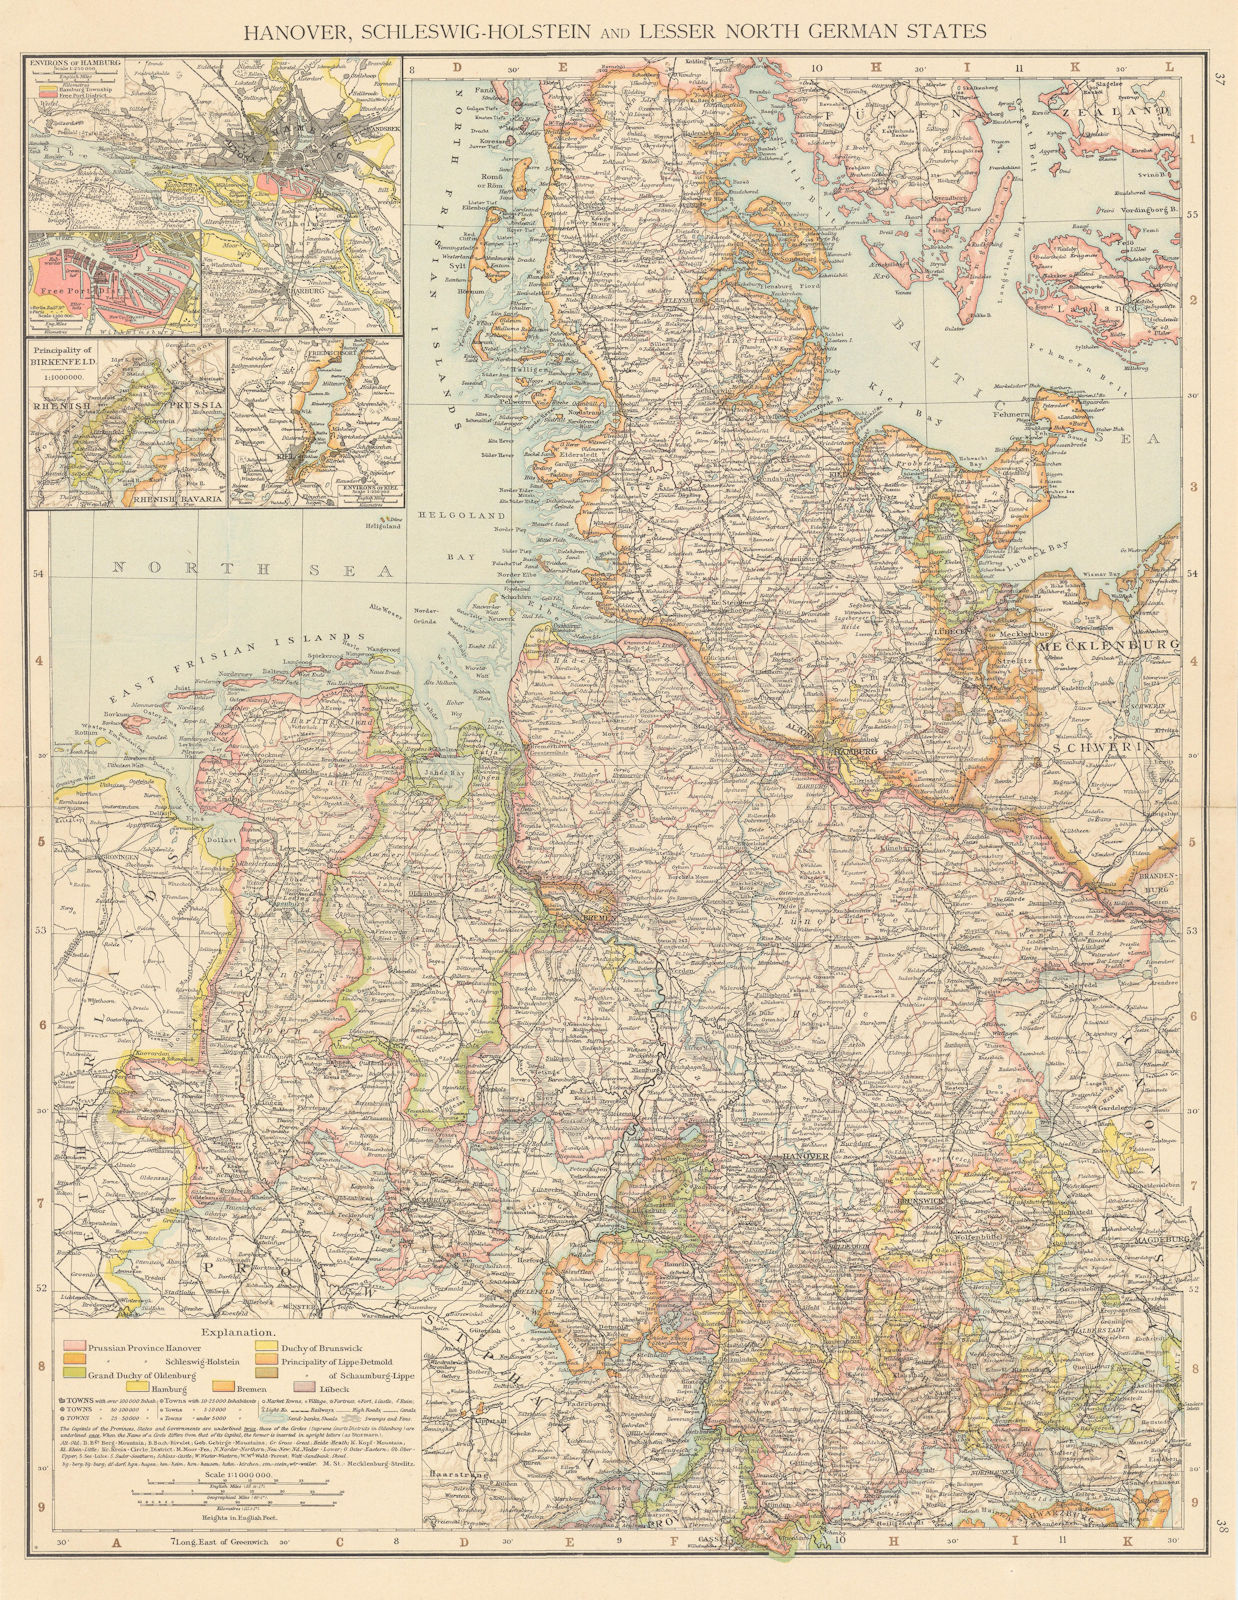 Northern Germany. Schleswig-Holstein. Hamburg. Lower Saxony. THE TIMES 1895 map